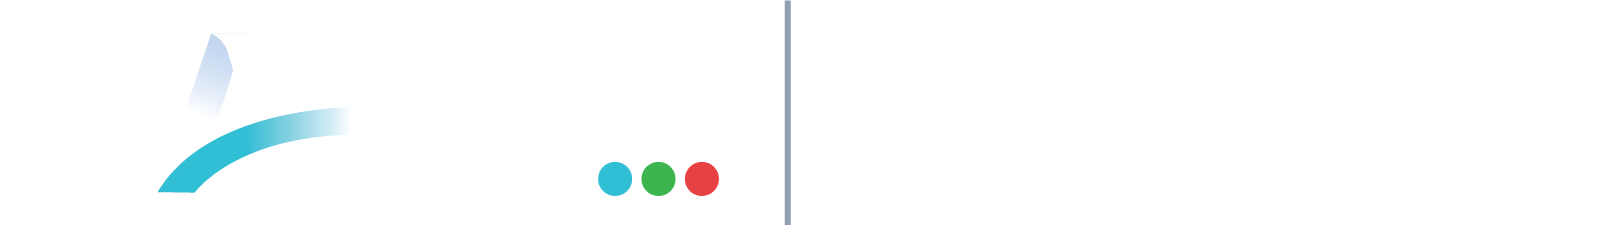 CARE Council Logo_Horizontal White